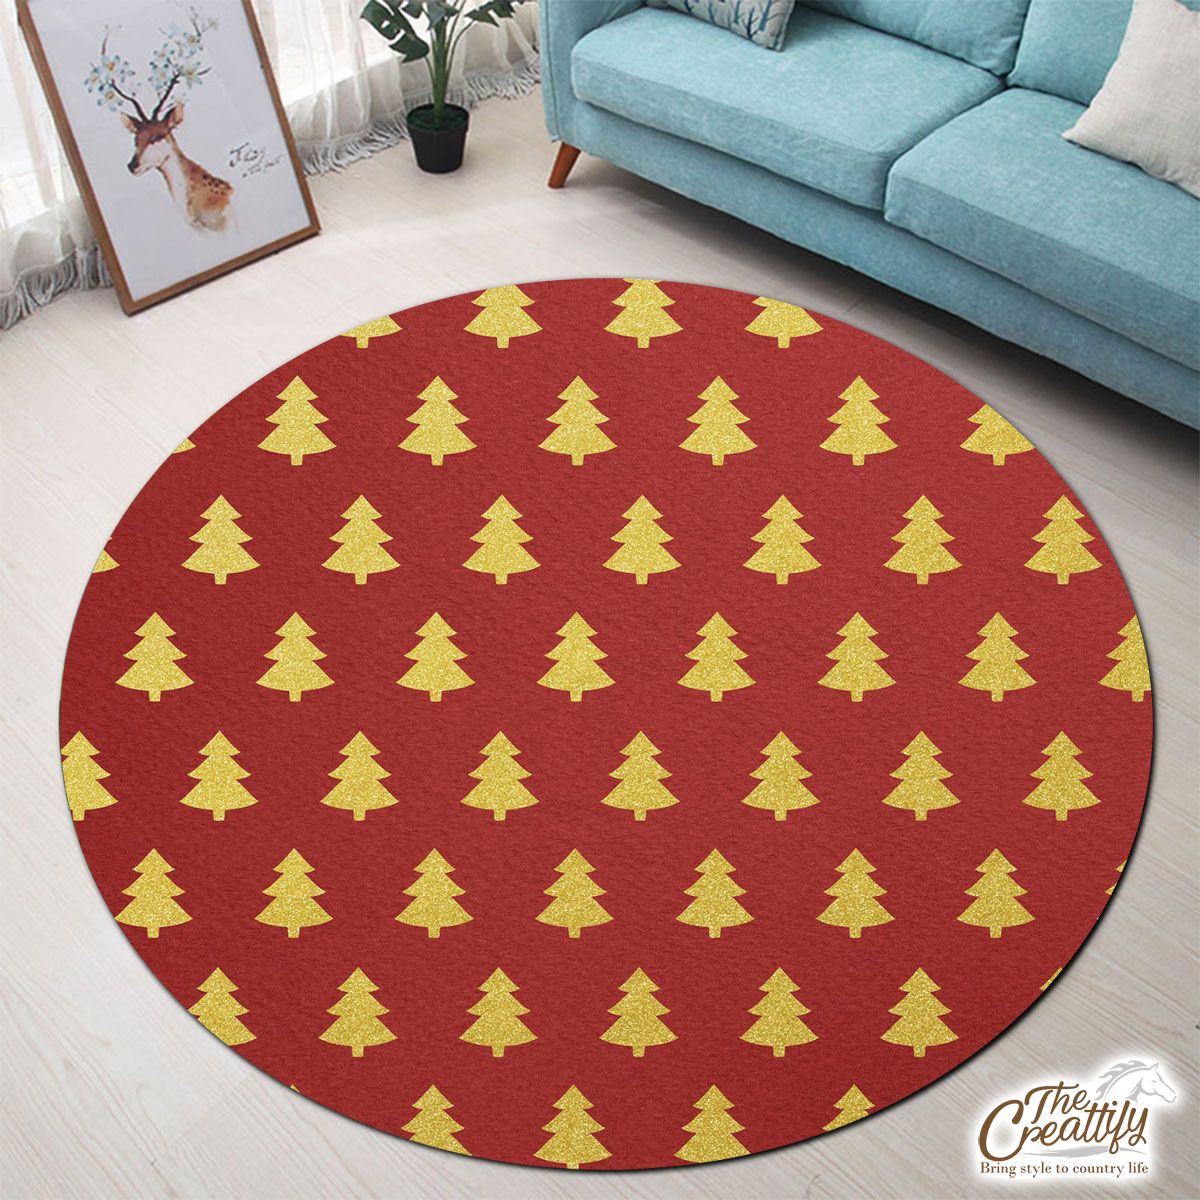 Christmas Tree, Christmas Tree Decorations, Pine Tree Pattern On Red Round Carpet